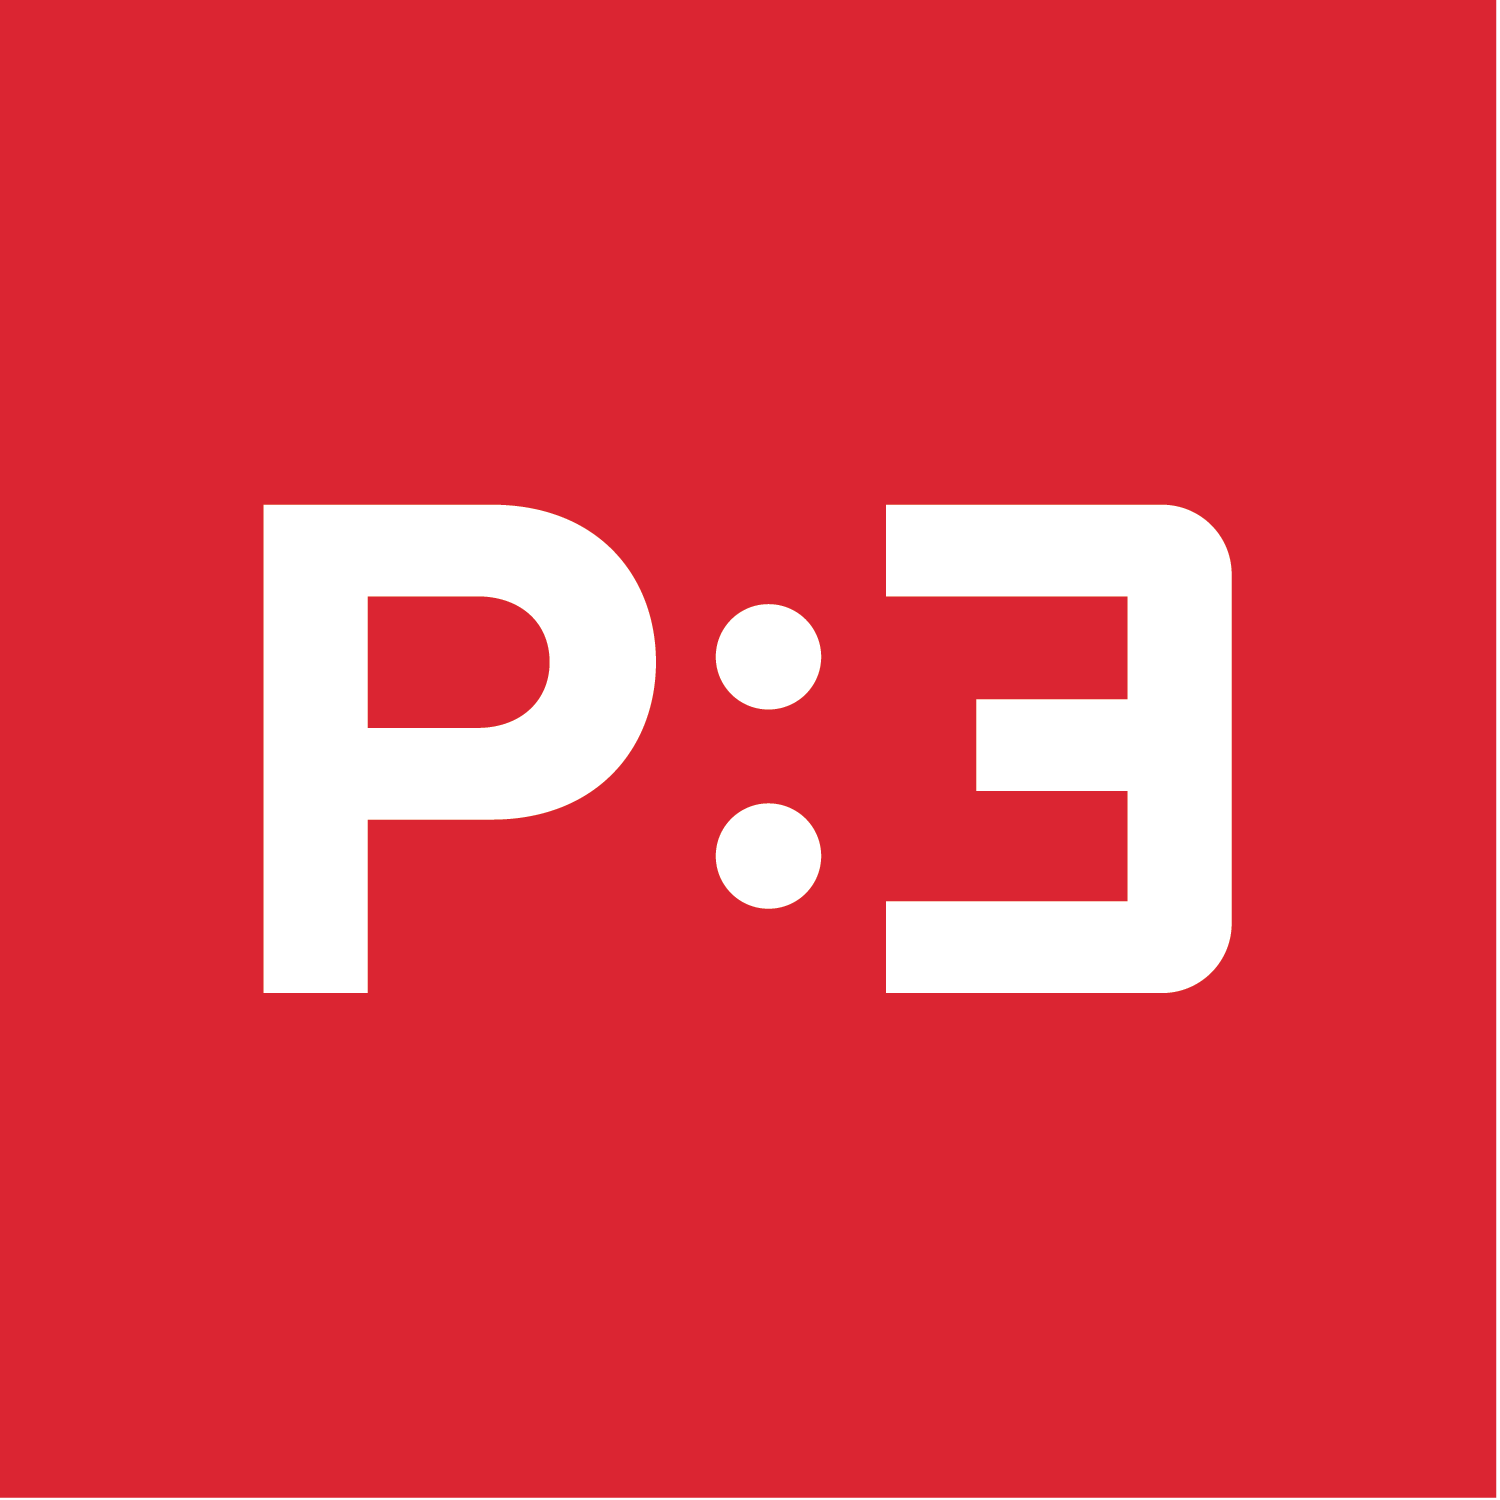 Company logo of Phase 3 Marketing and Communications